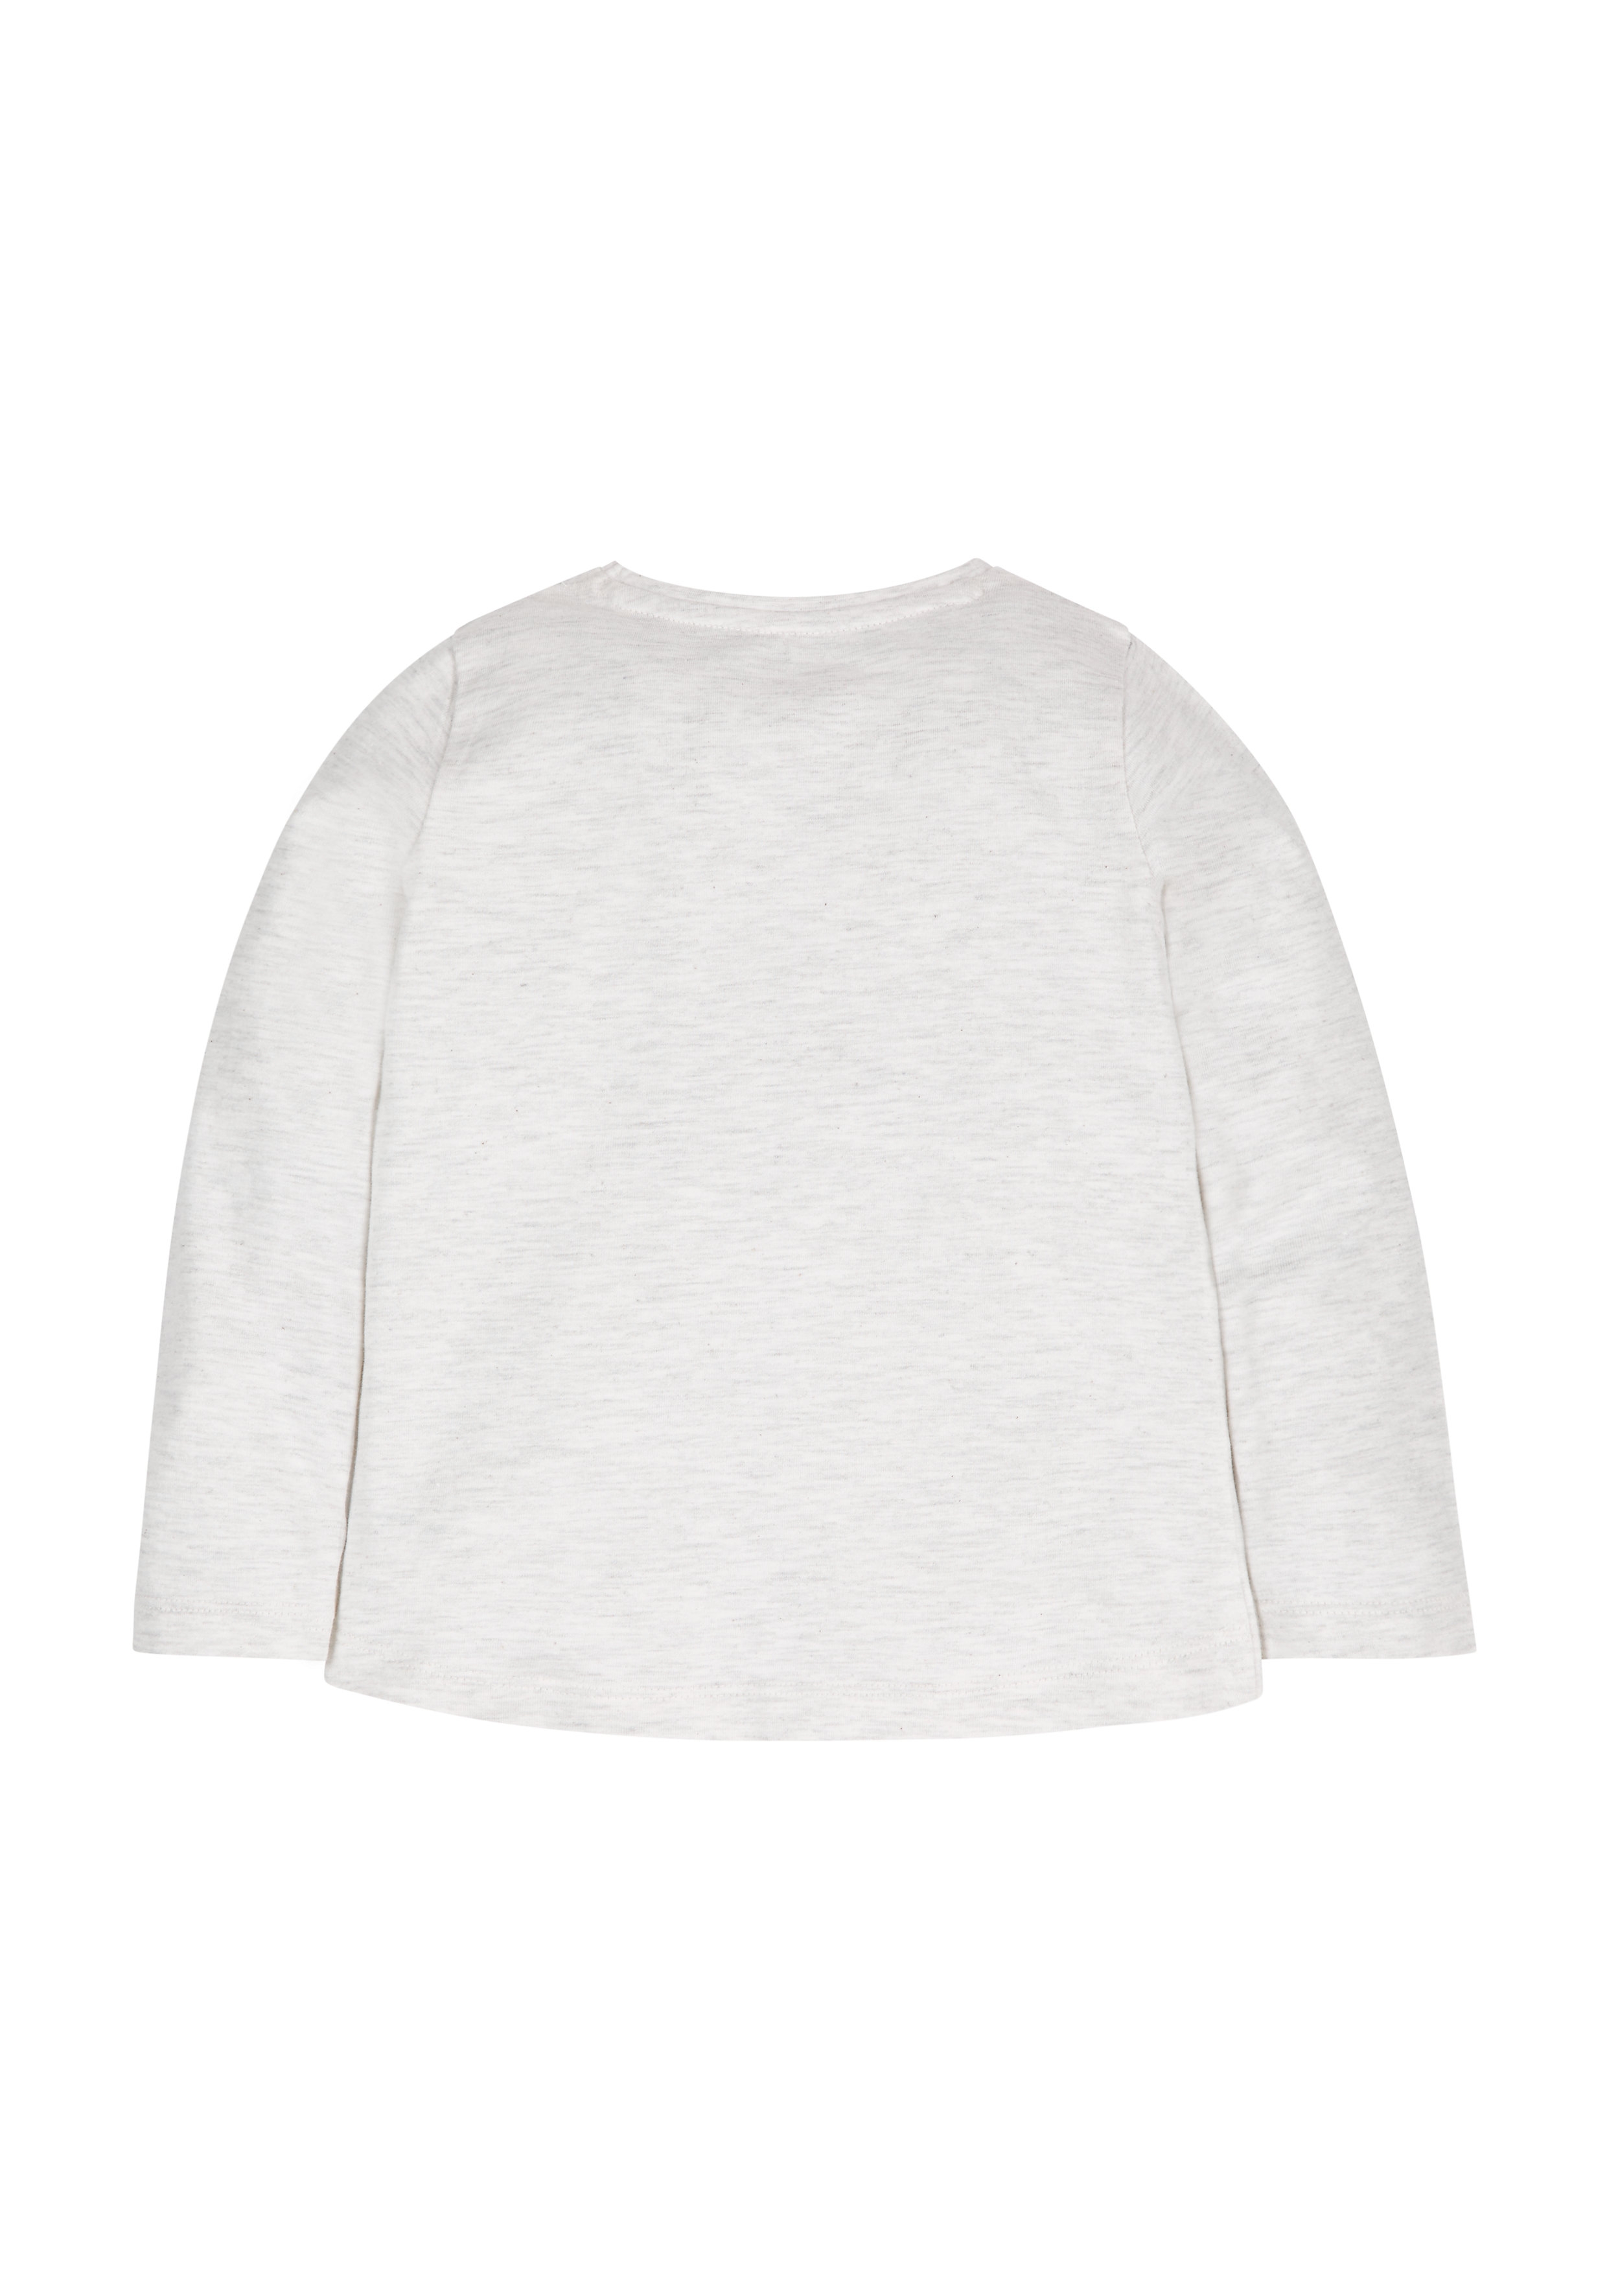 Mothercare | Girls Bunny T-Shirt  - White 1